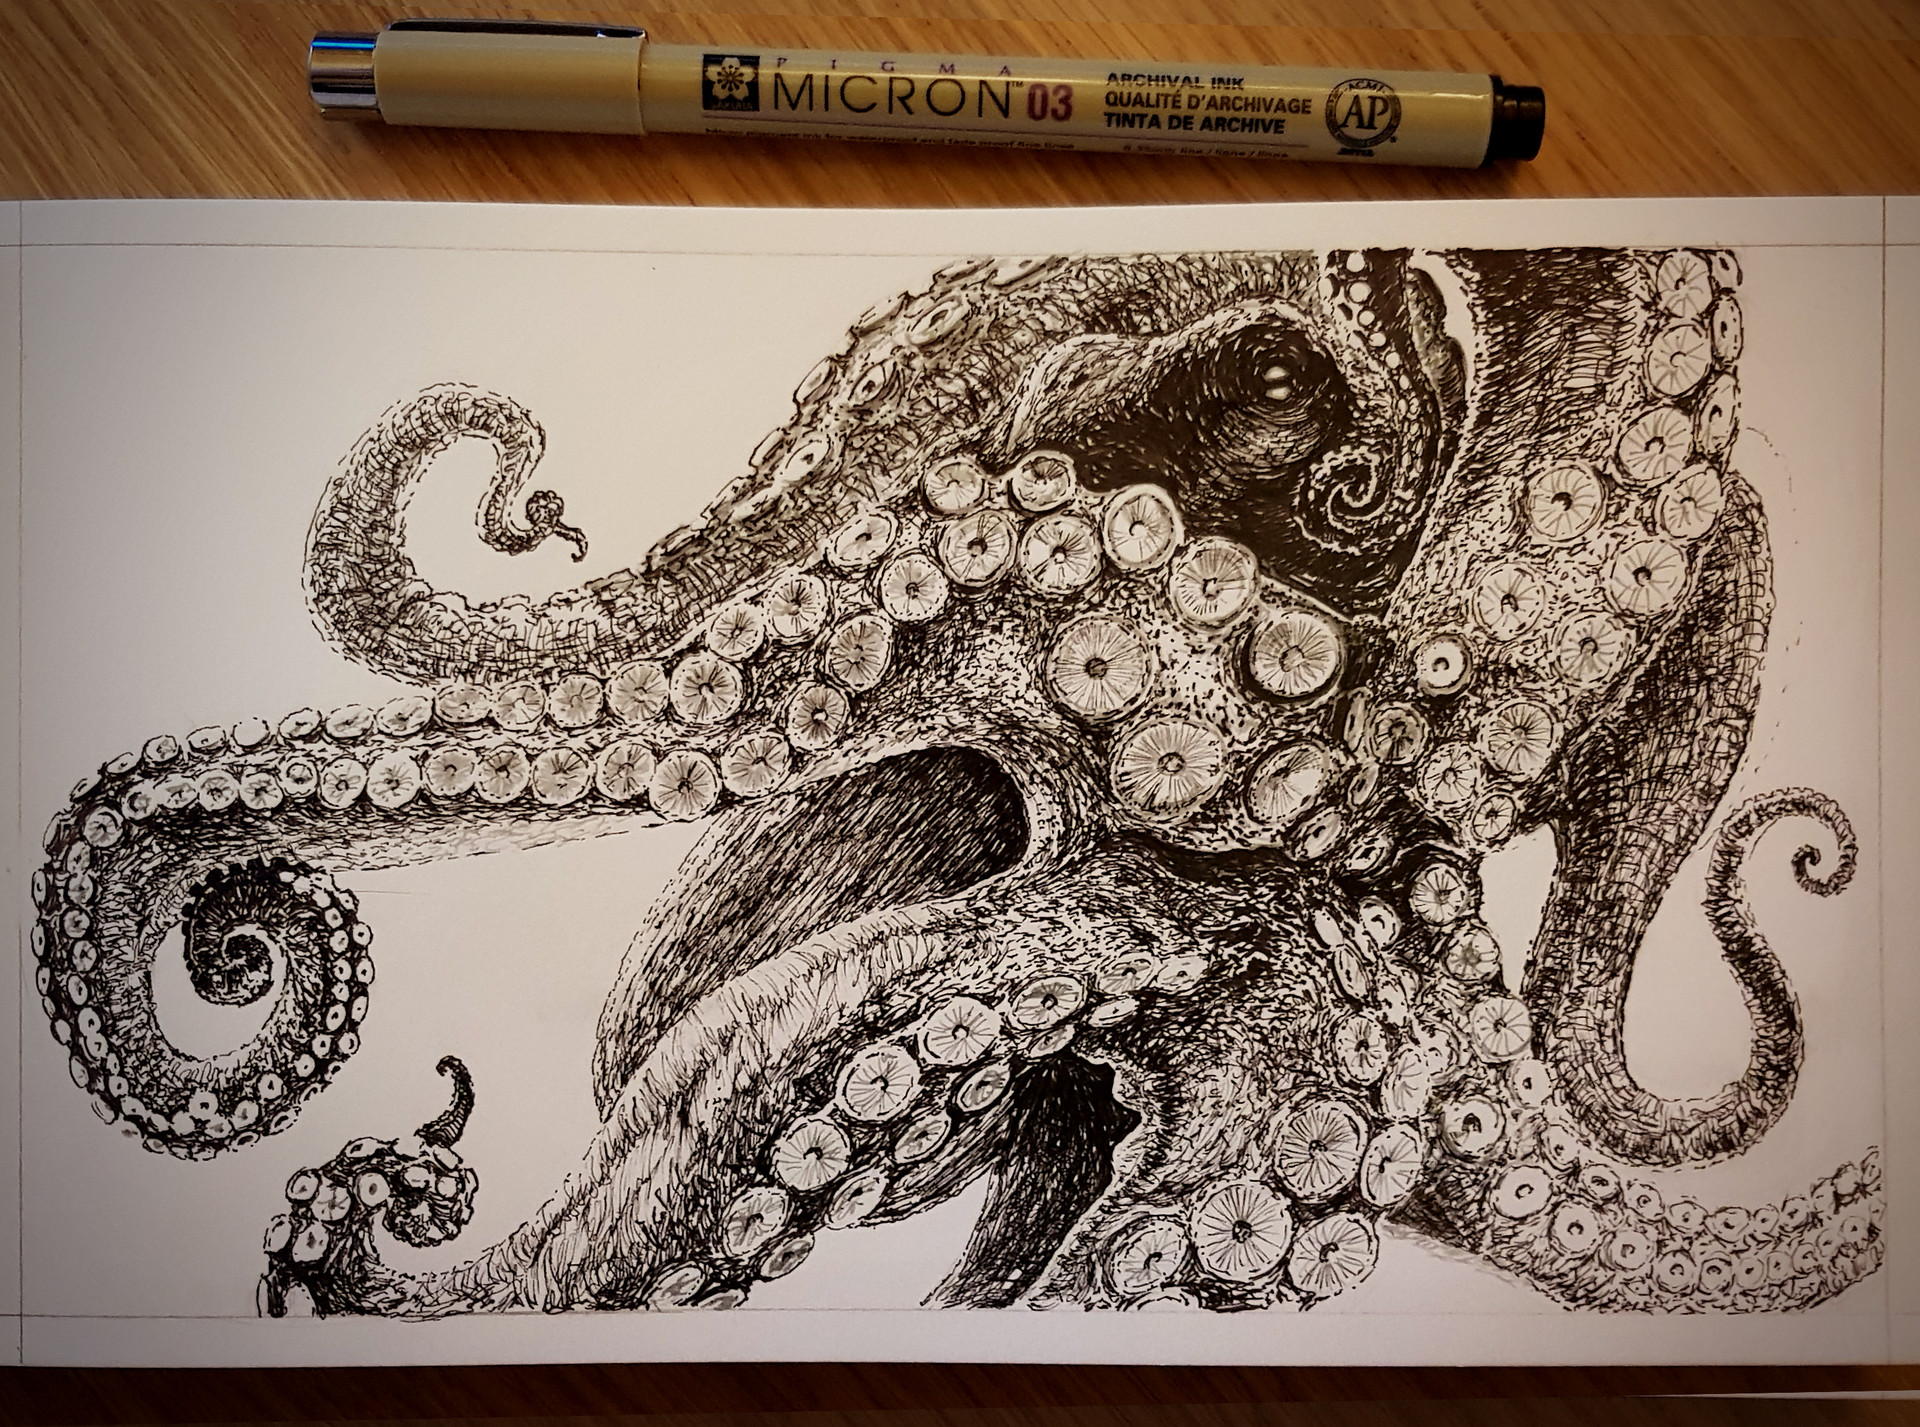 Octopus Sketch